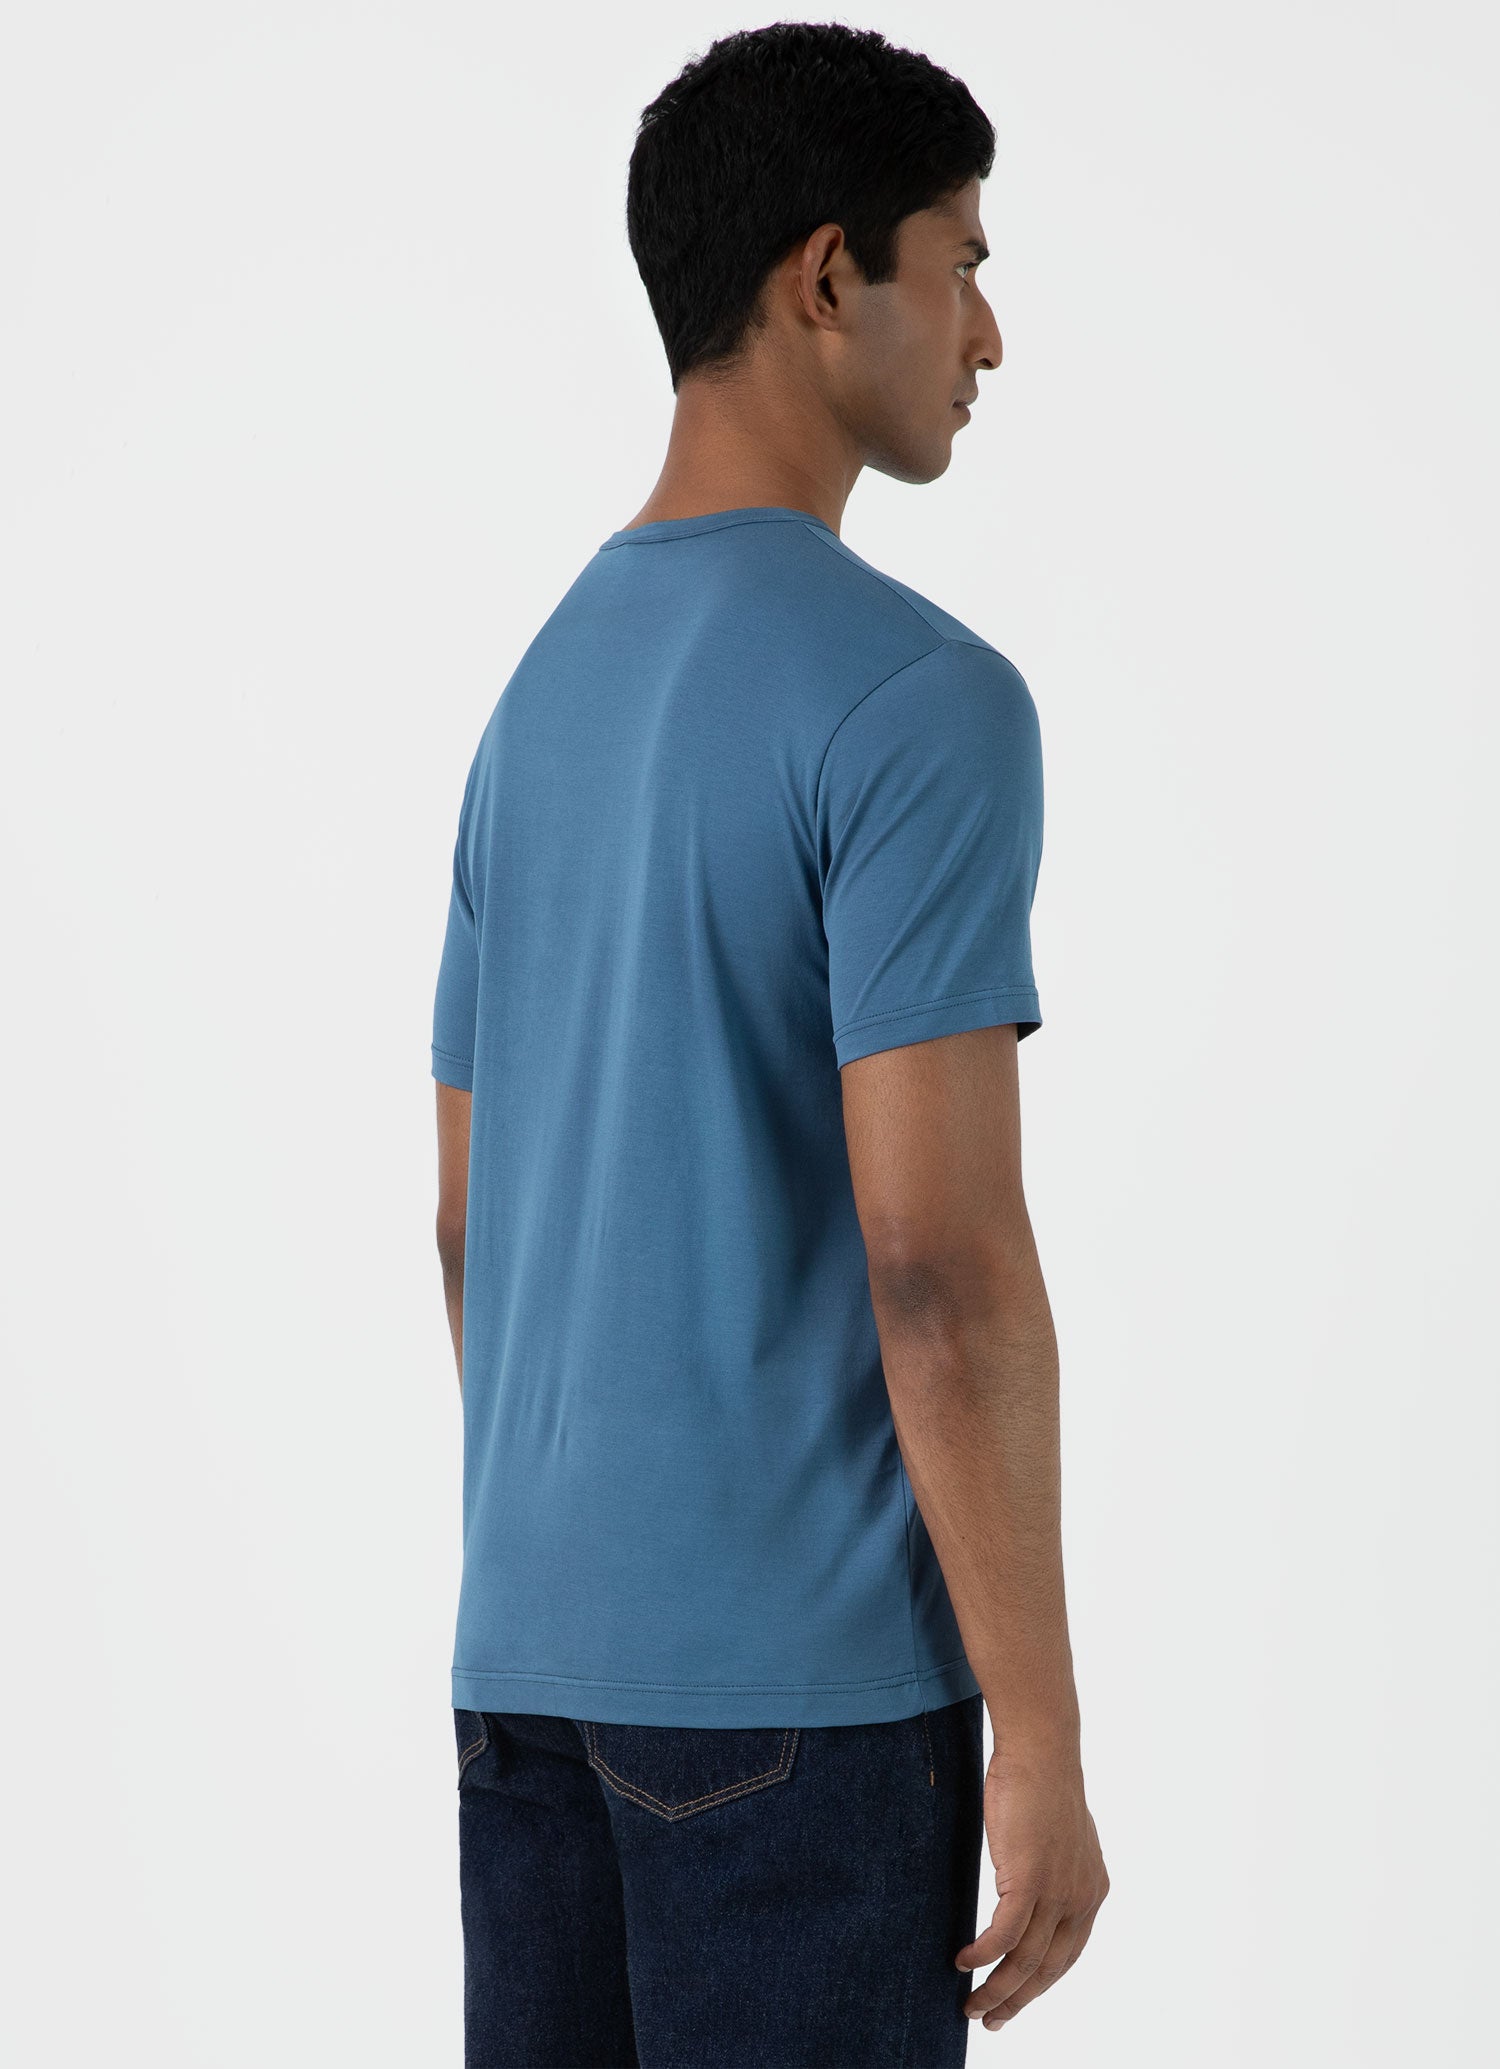 Men's Classic T-shirt in Steel Blue